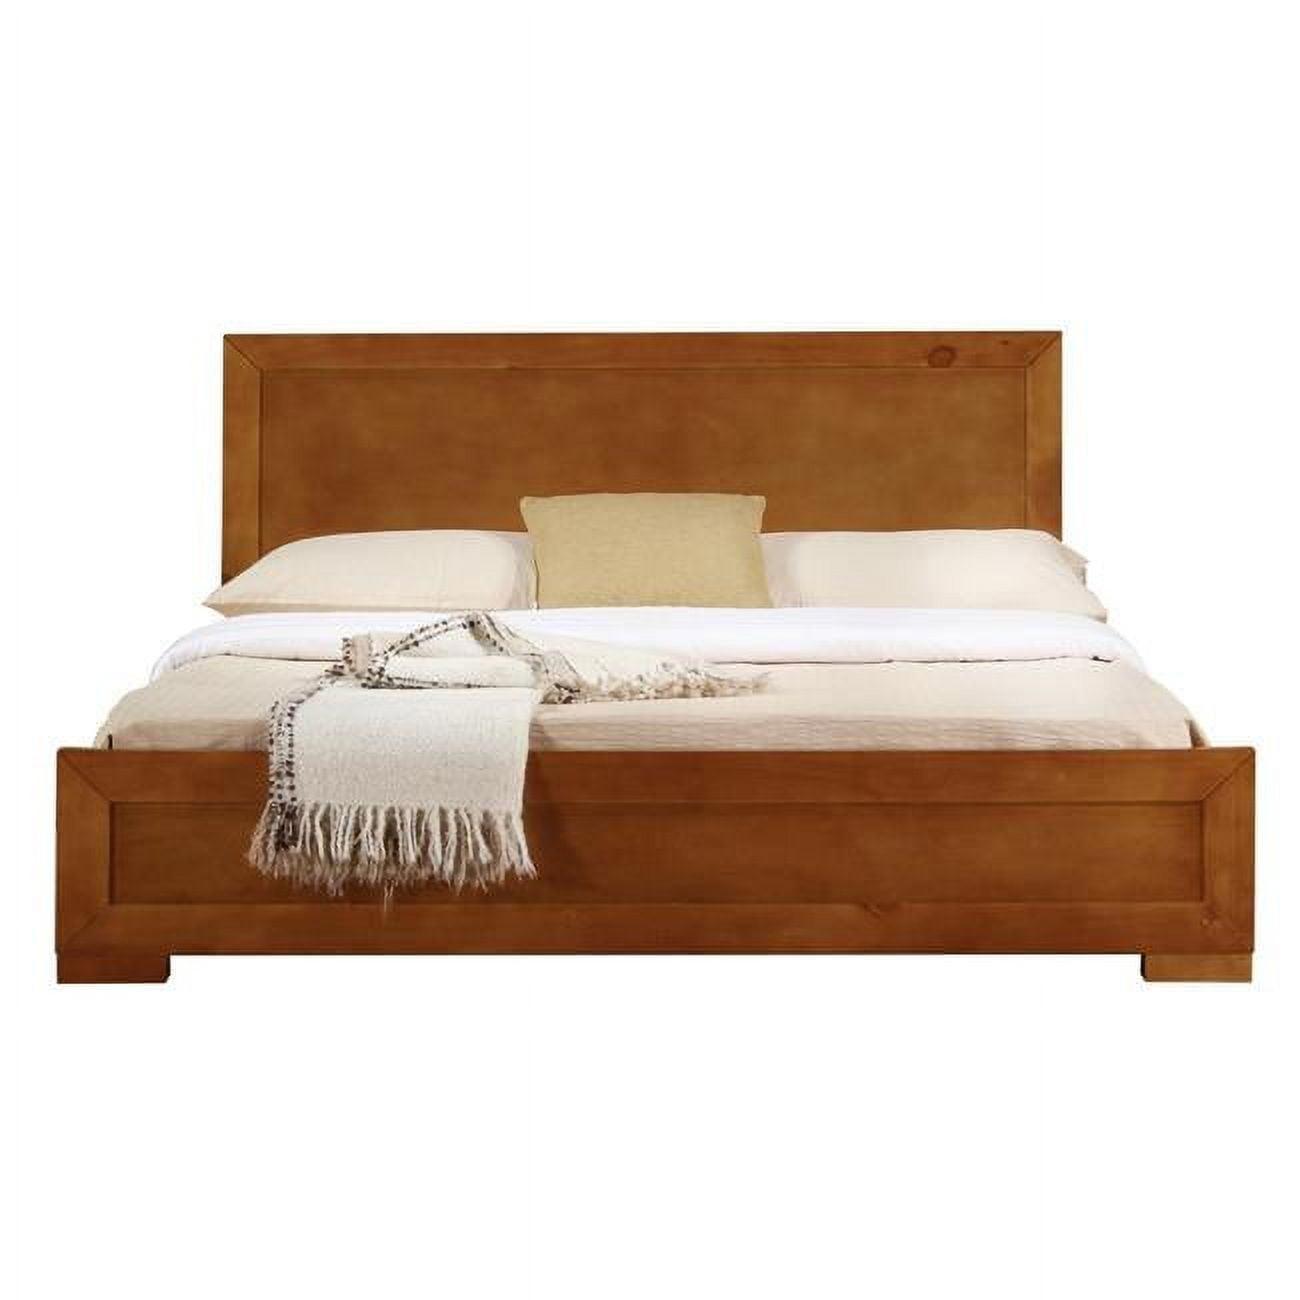 Full Oak Wood Platform Bed with Headboard and Slats